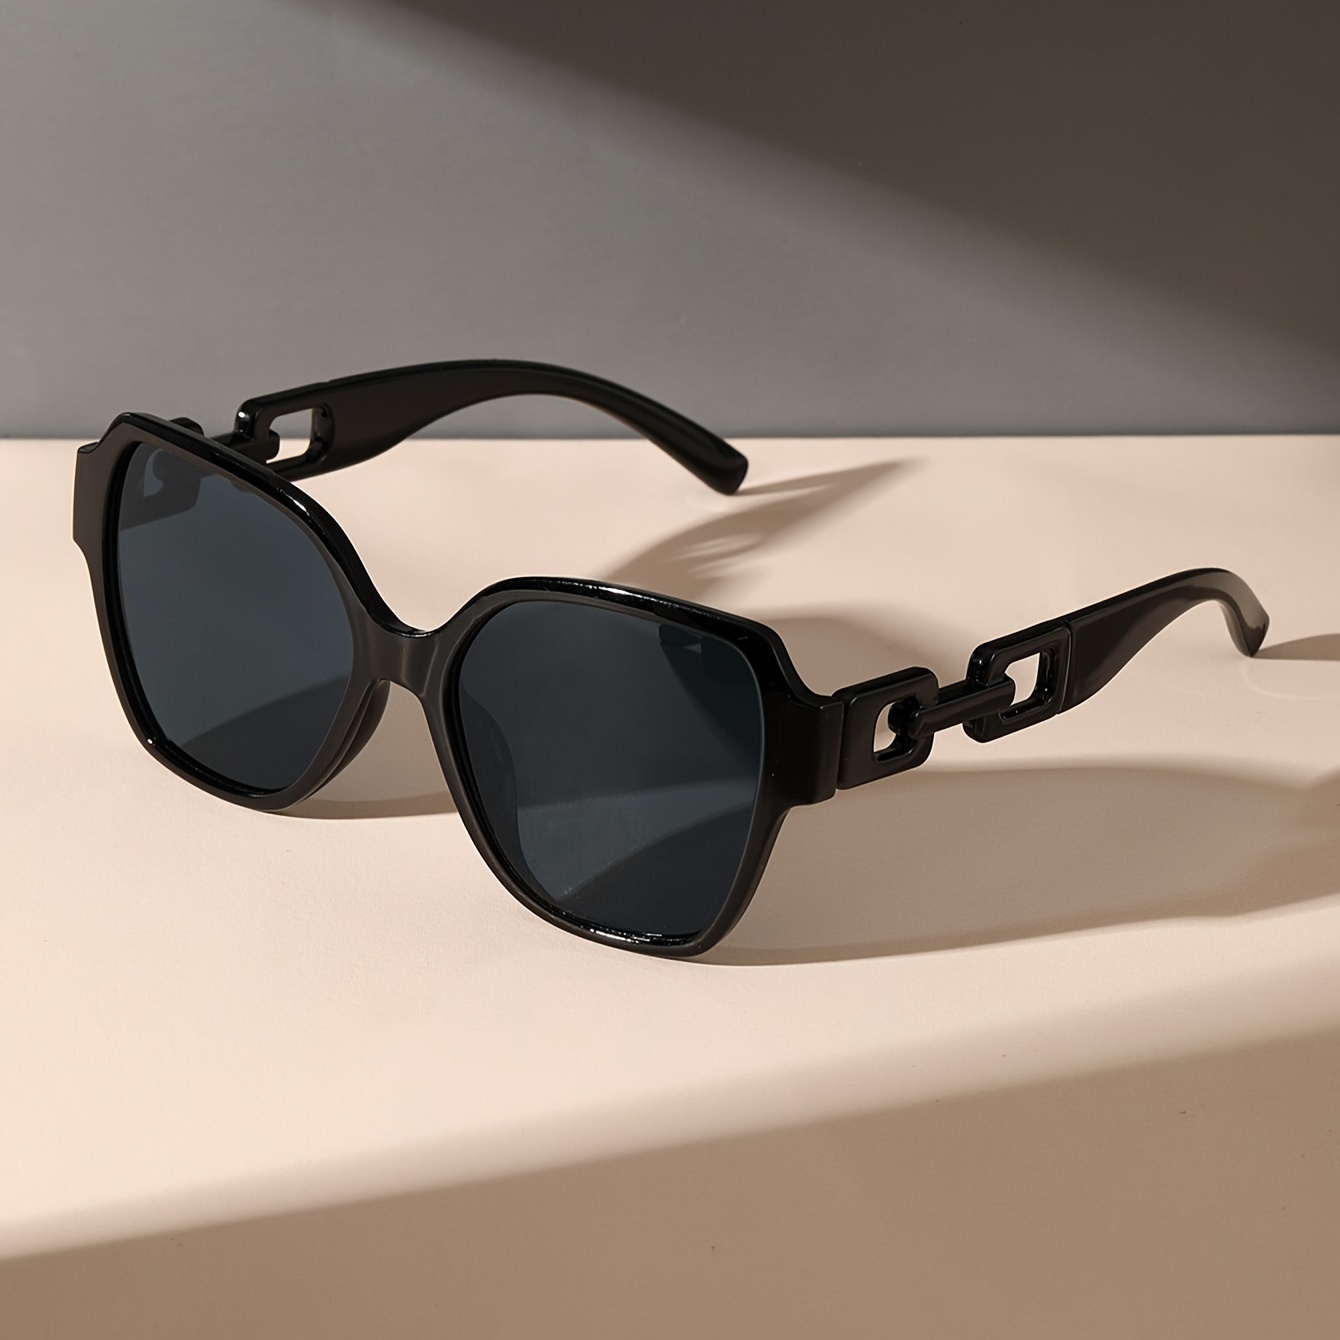 

Black Hollow Hinge Fashion Glasses For Women Men Anti Glare Sun Shades Glasses For Driving Beach Travel